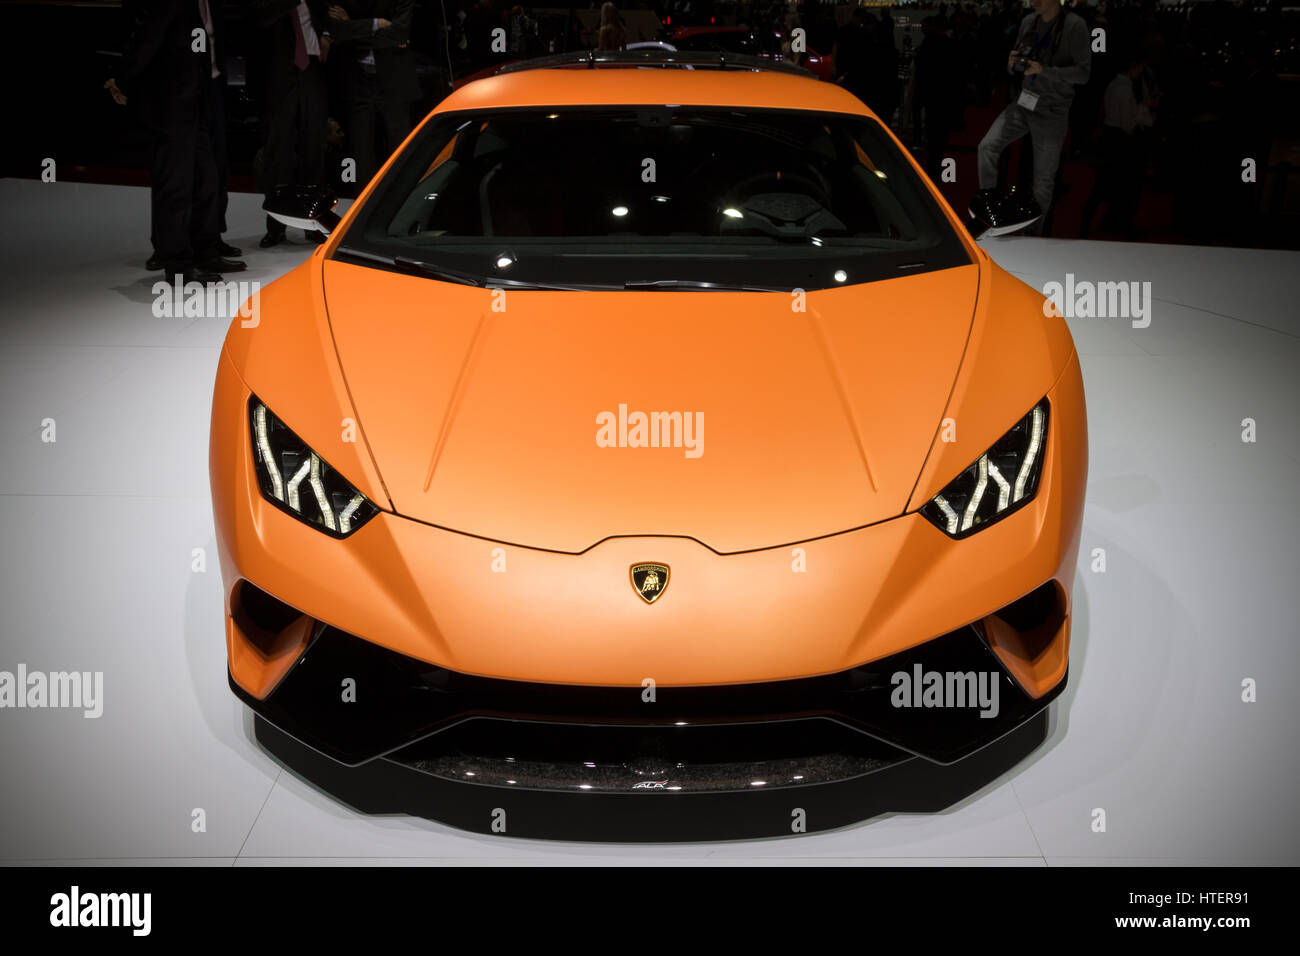 Lamborghini Huracan Performante Stockfotos und -bilder Kaufen - Alamy